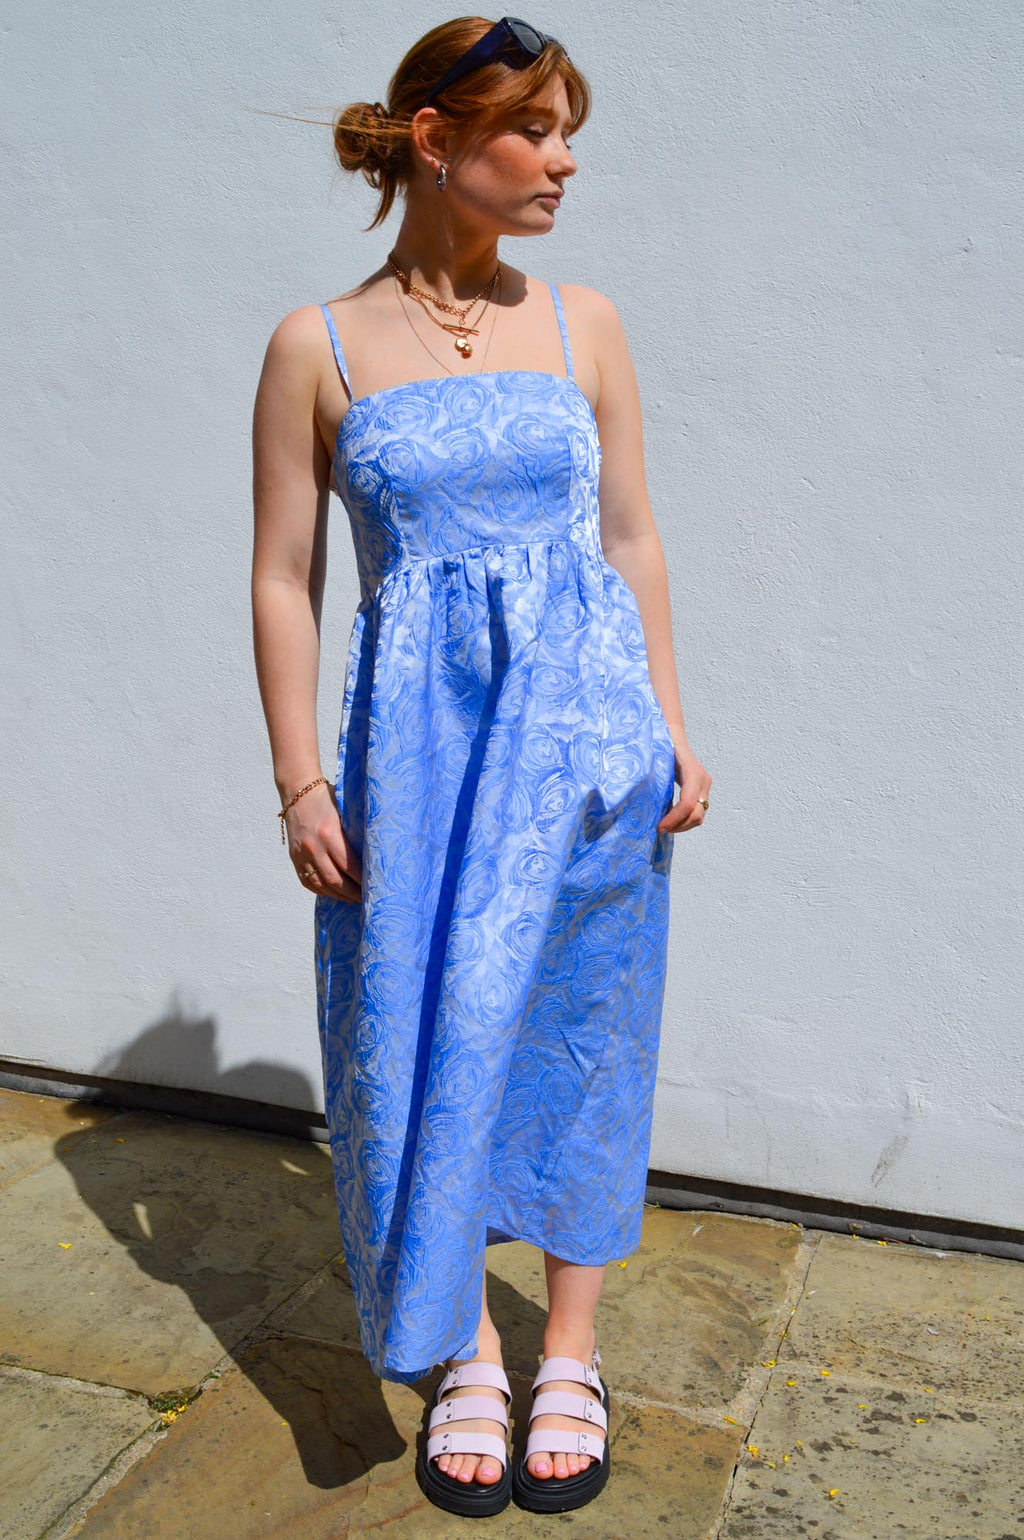 Baum Und Pferdgarten Alvina Blue Rose Jacquard Dress - The Mercantile London